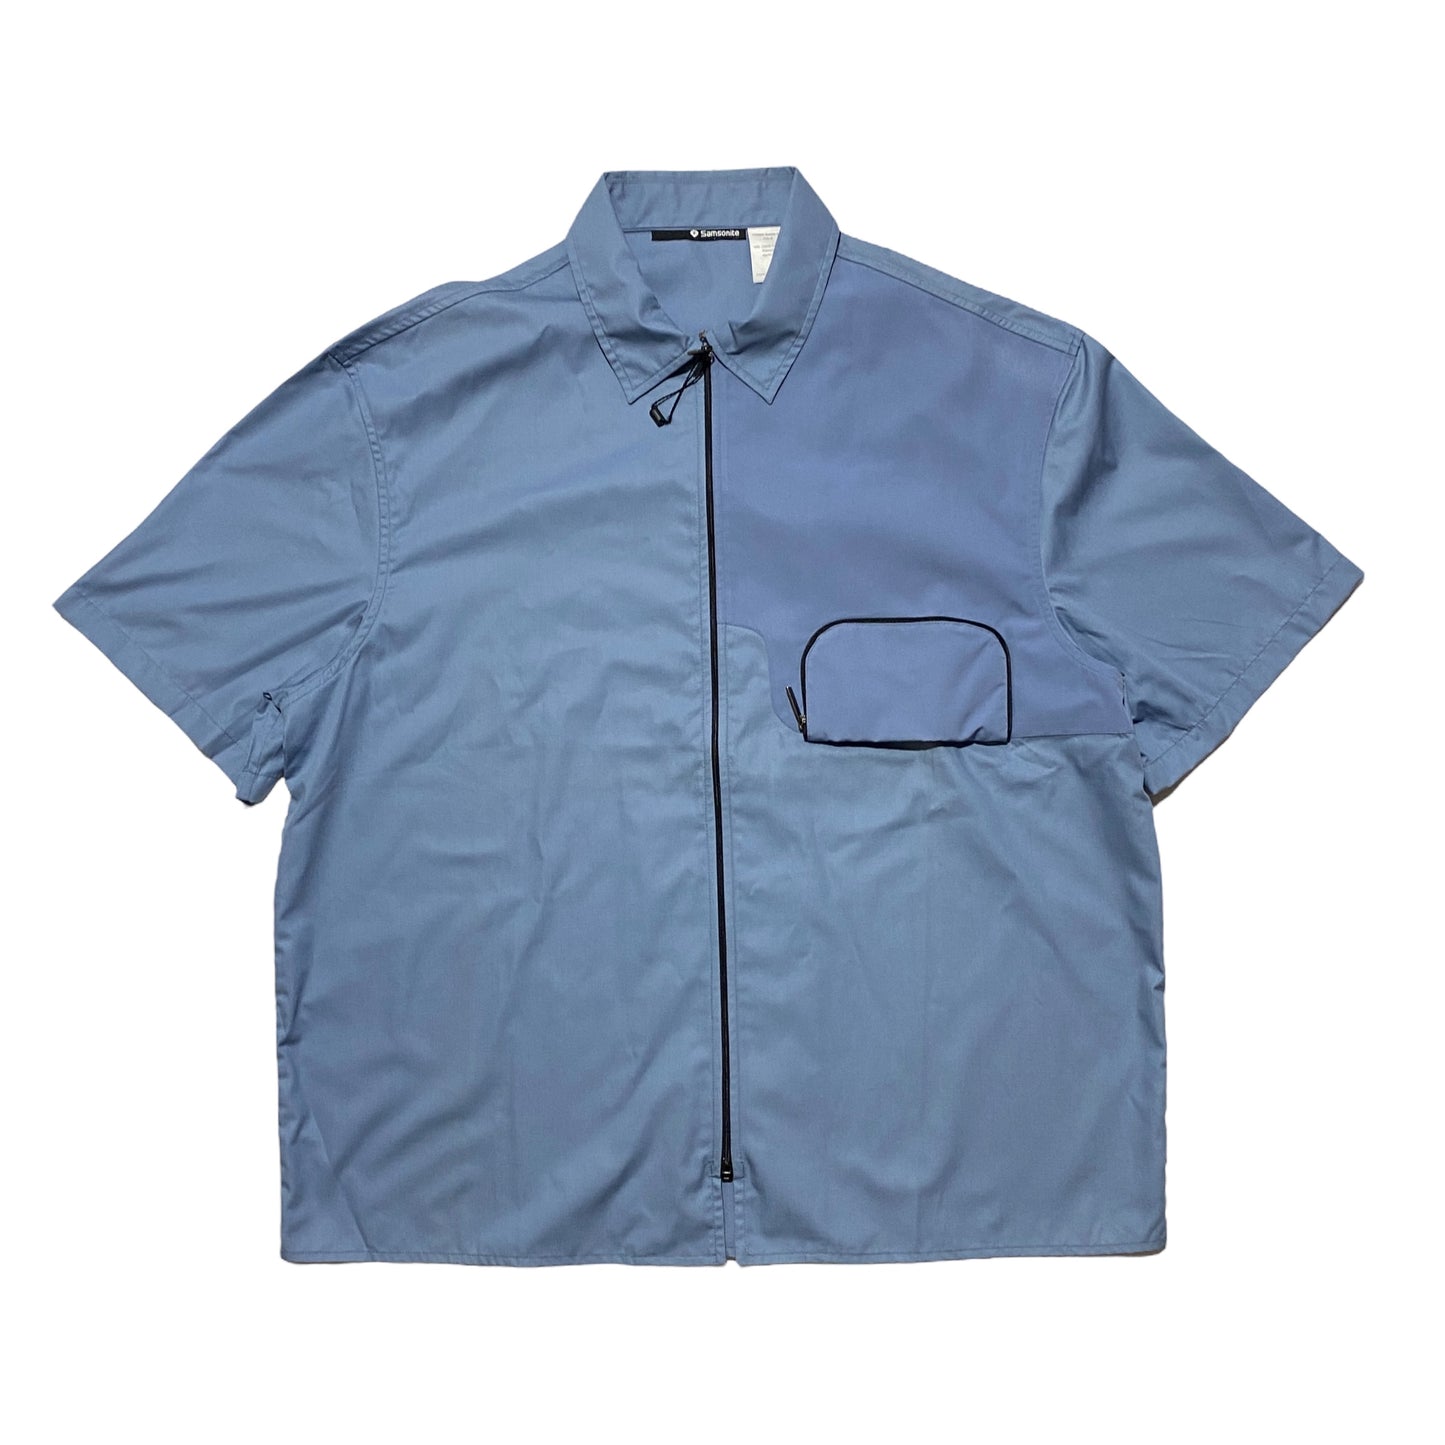 00's Samsonite ''Travel Wear Collection'' by Neil Barrett Shirt (42)